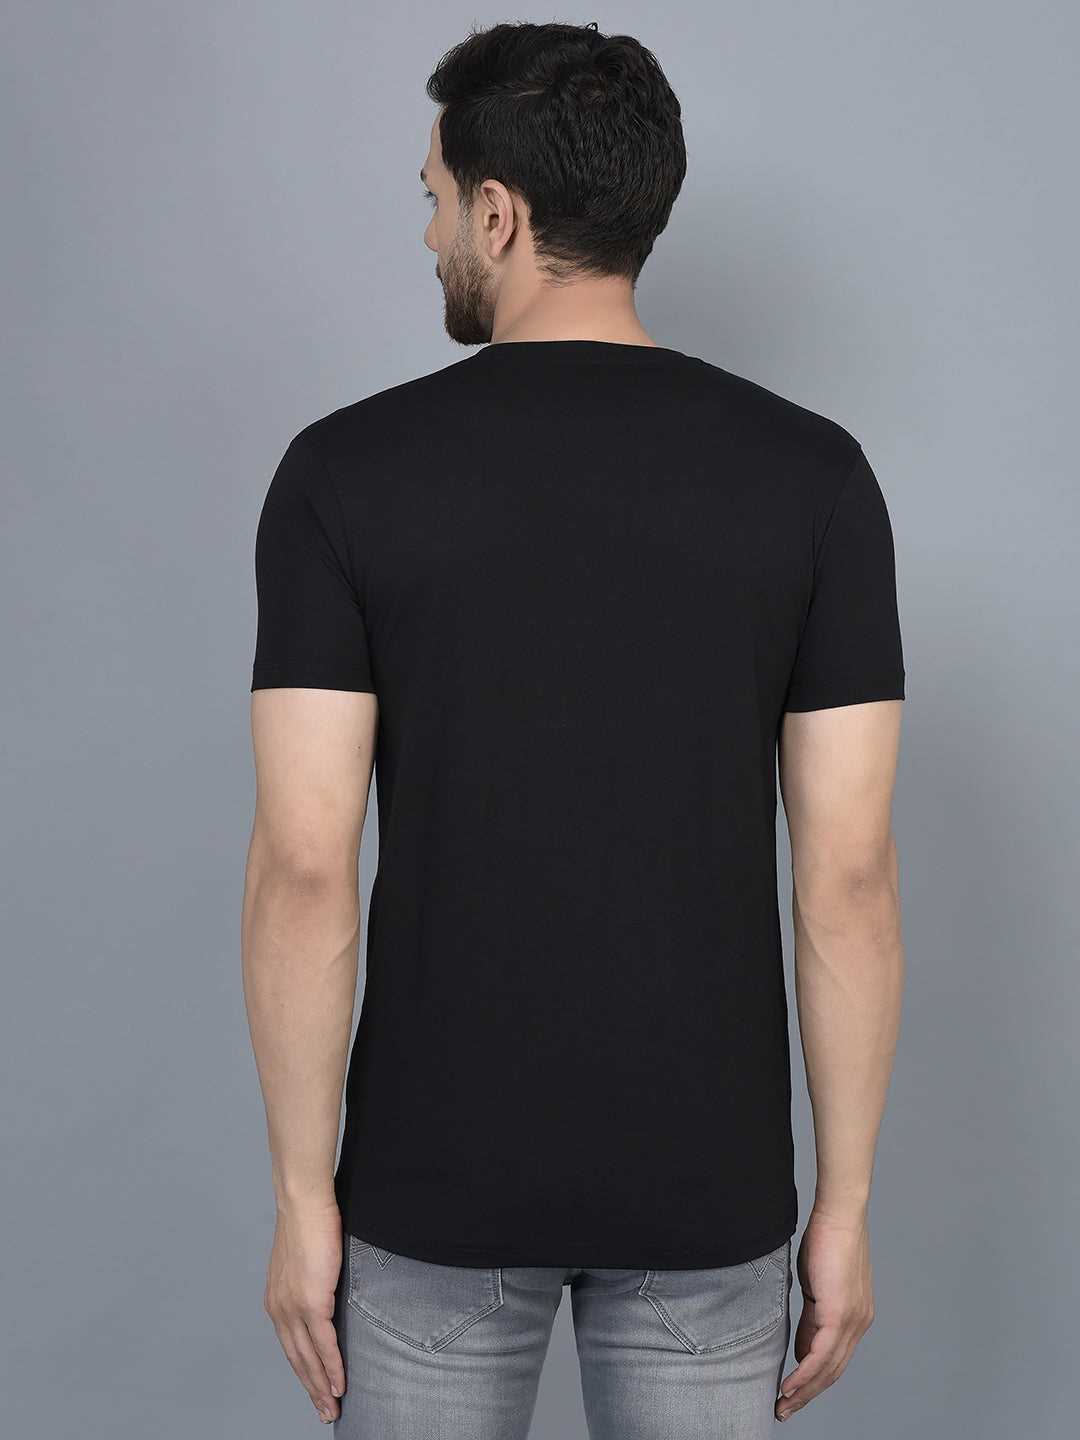 Cobb Black Printed Round Neck T-Shirt